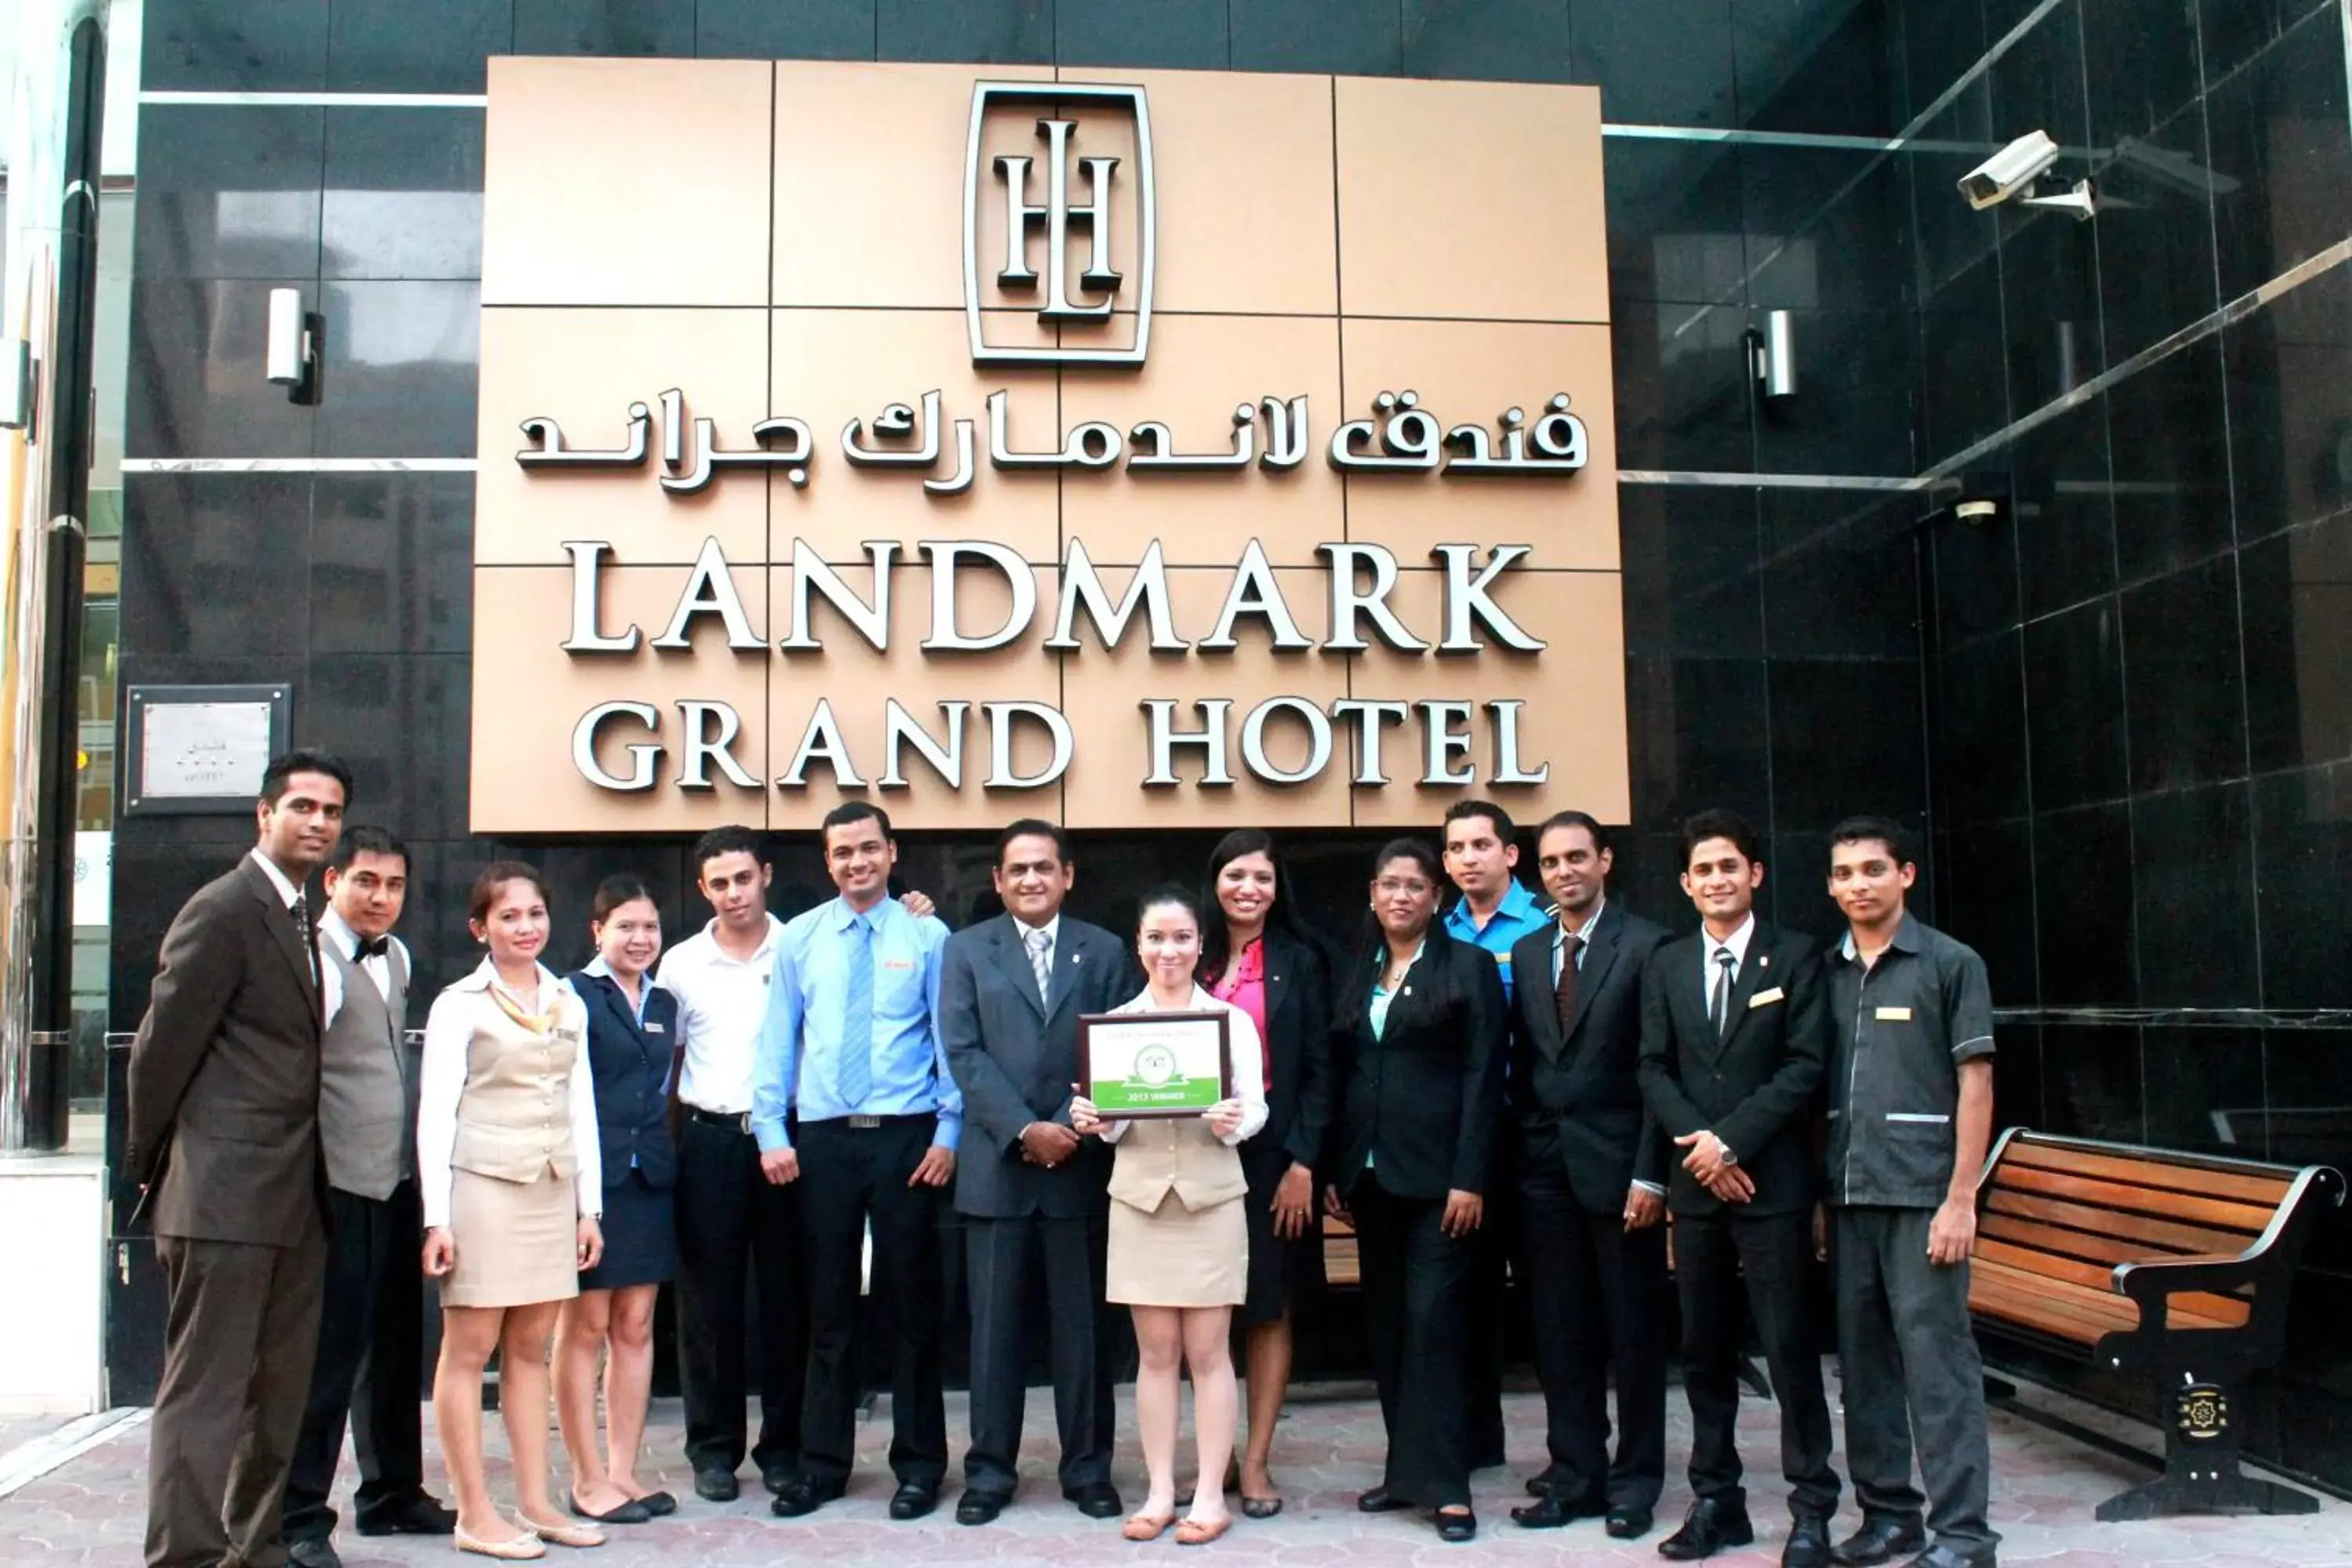 Staff in Landmark Grand Hotel